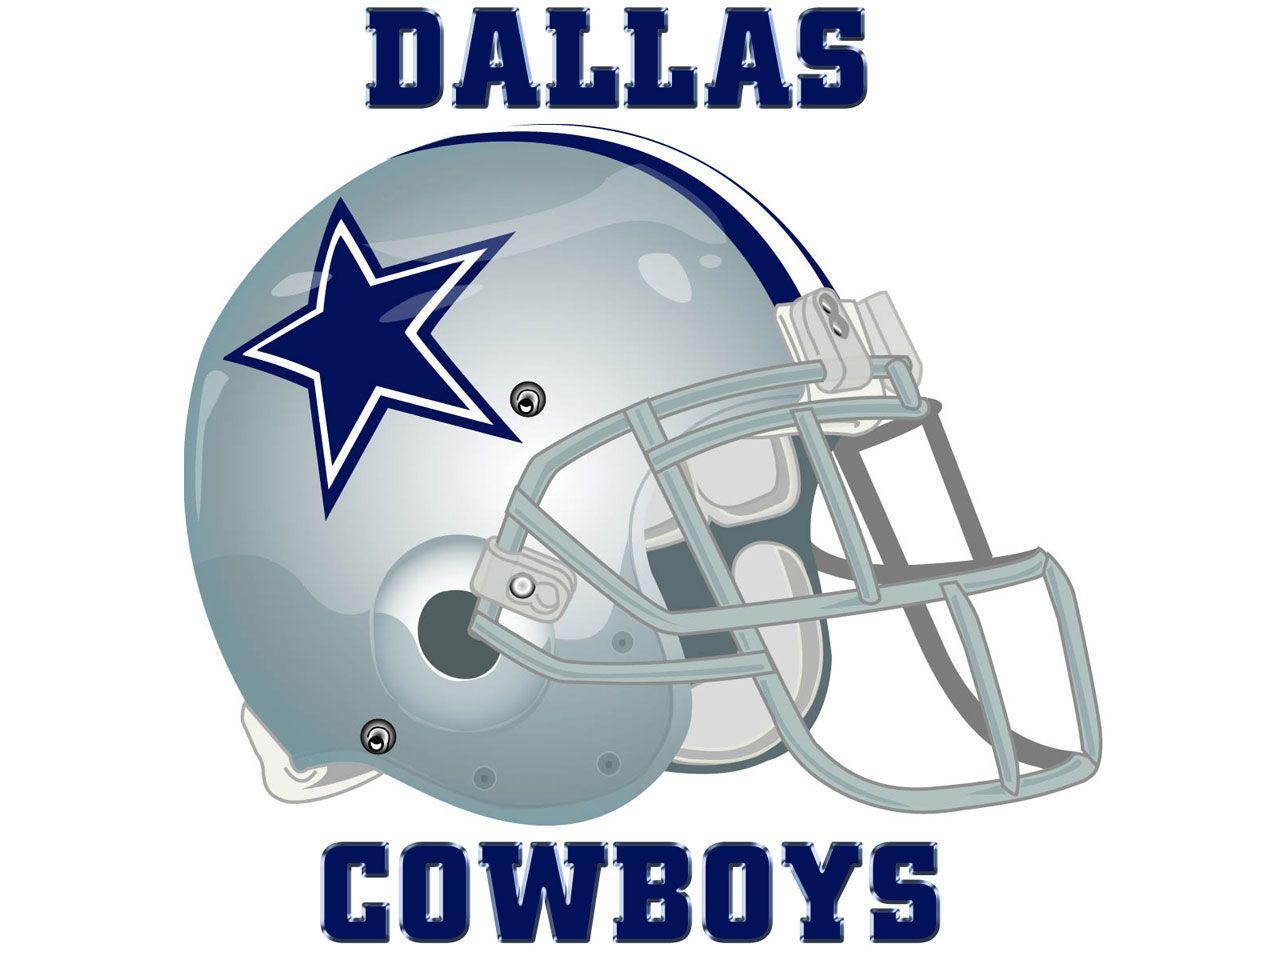 Dallas Cowboys Image Wallpapers - Wallpaper Cave